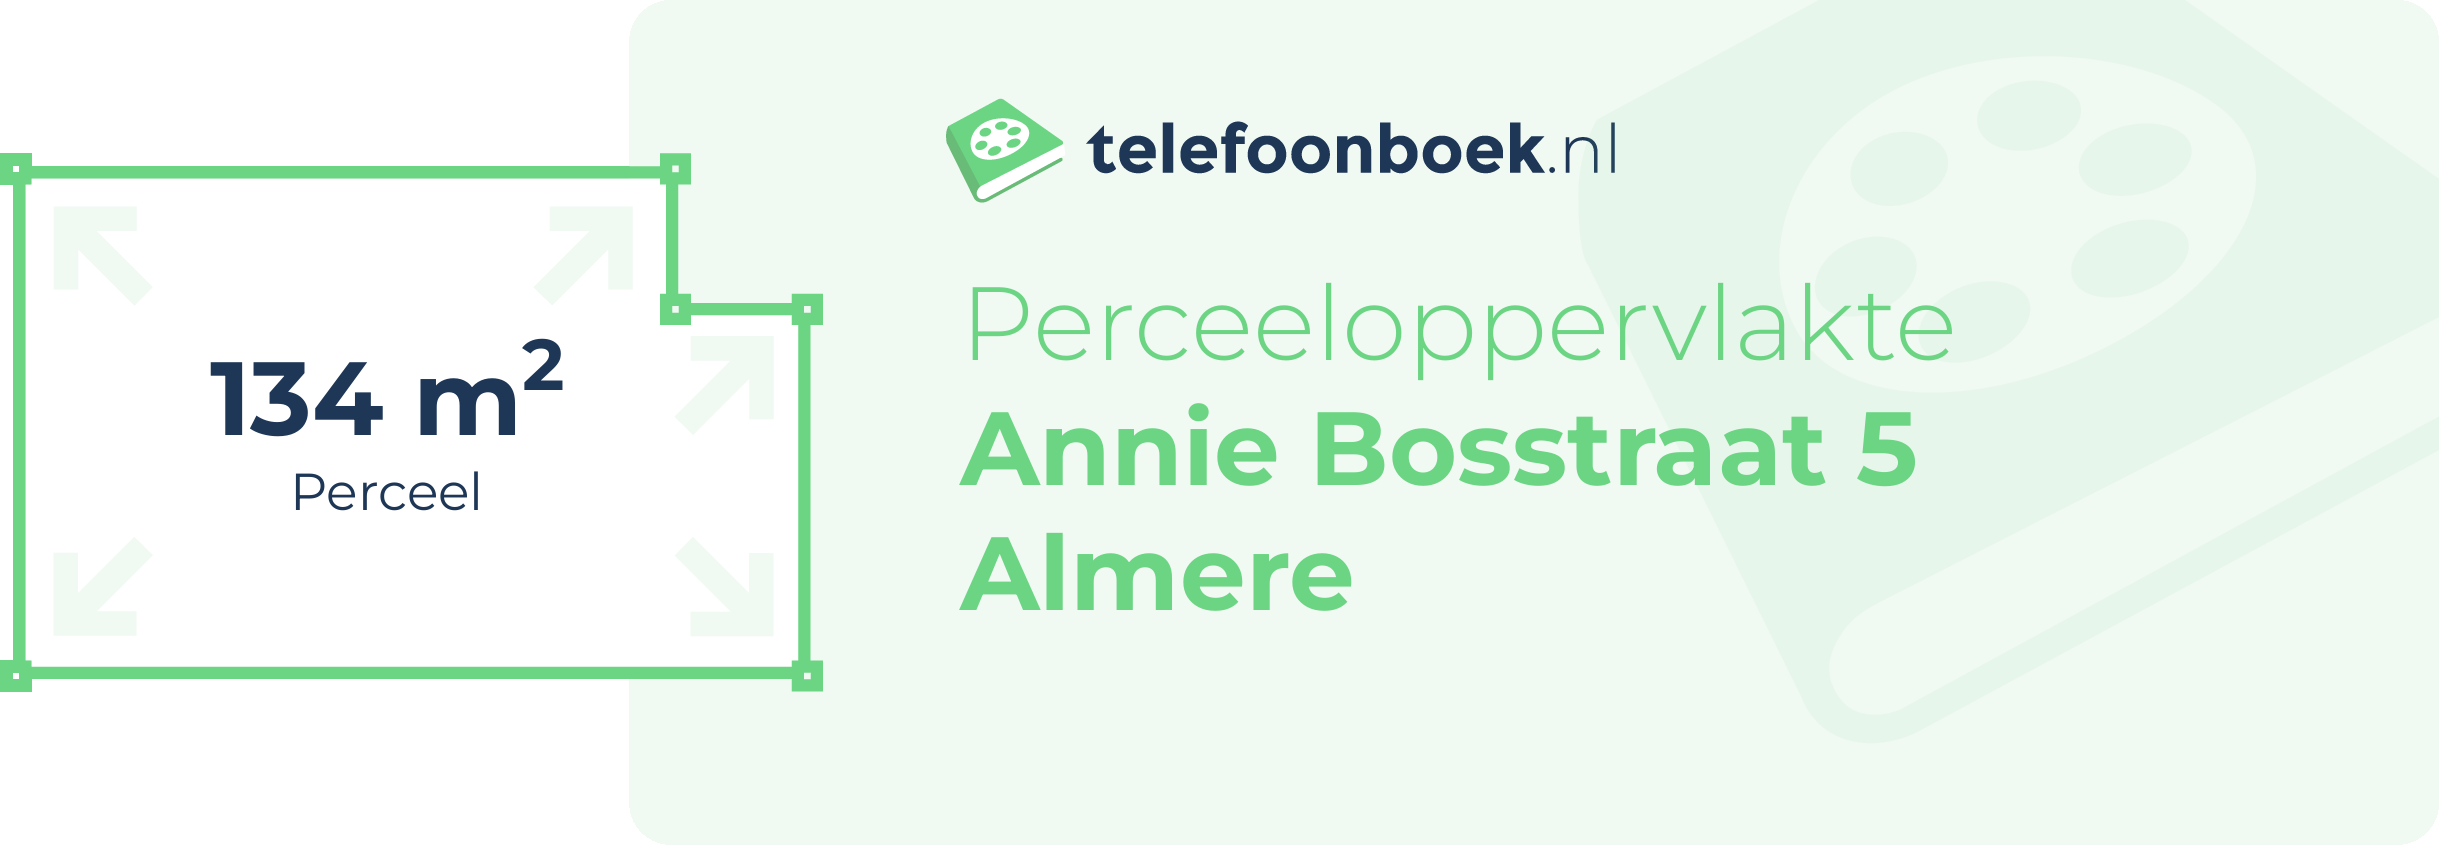 Perceeloppervlakte Annie Bosstraat 5 Almere